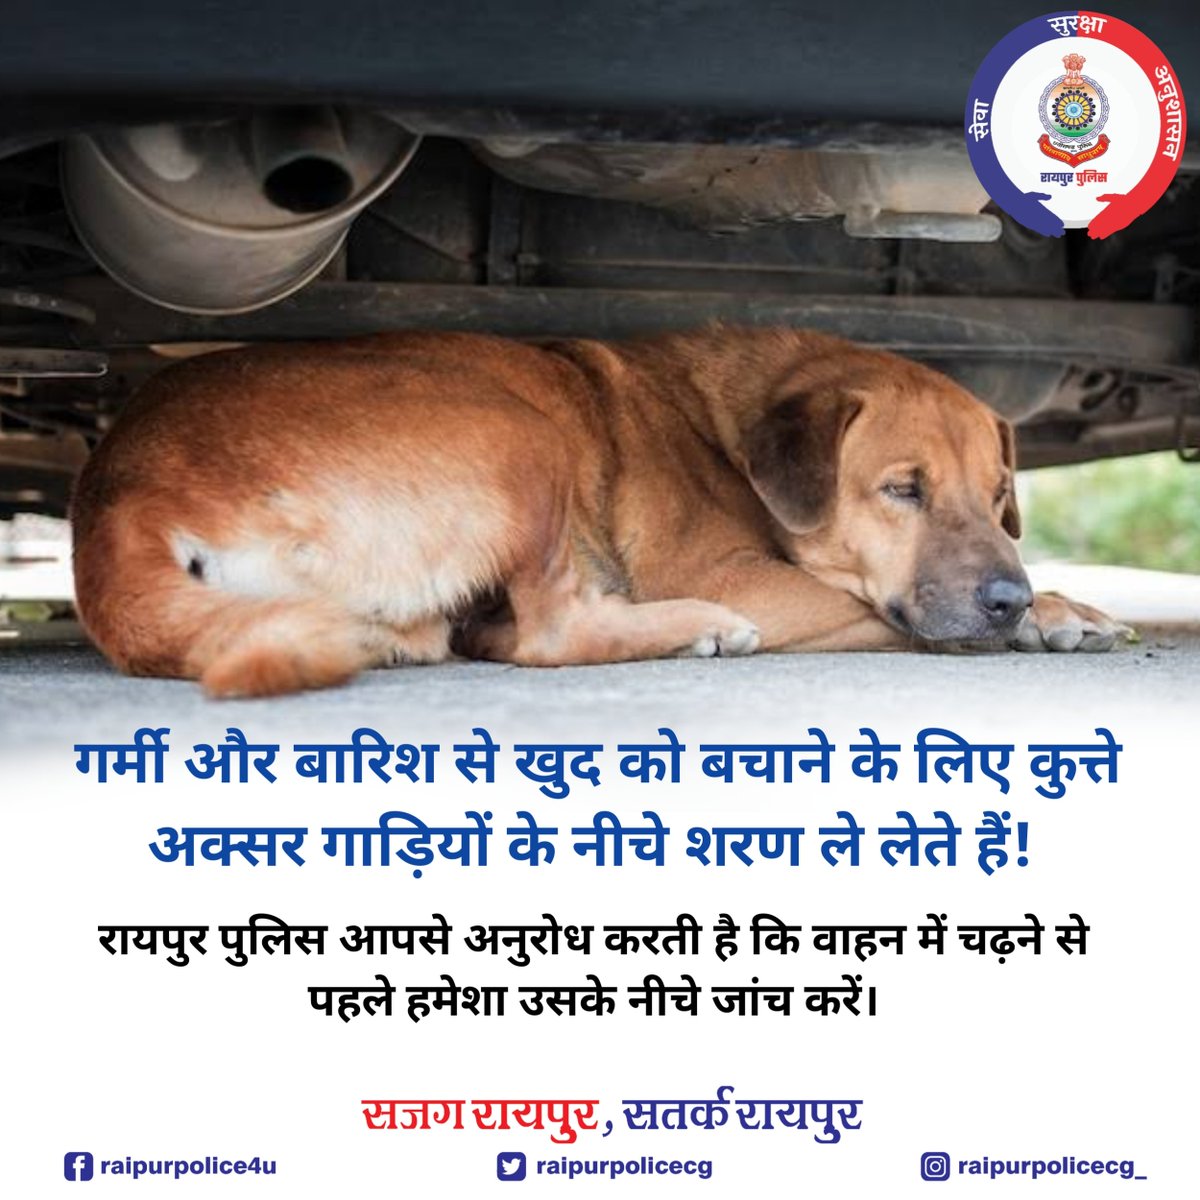 Always check!! 😊
. 
Please share it! 
.
. 
#raipurpolice #raipur #raipurcity #awareness #morraipur #animallover #animal #dogcare #animallovers